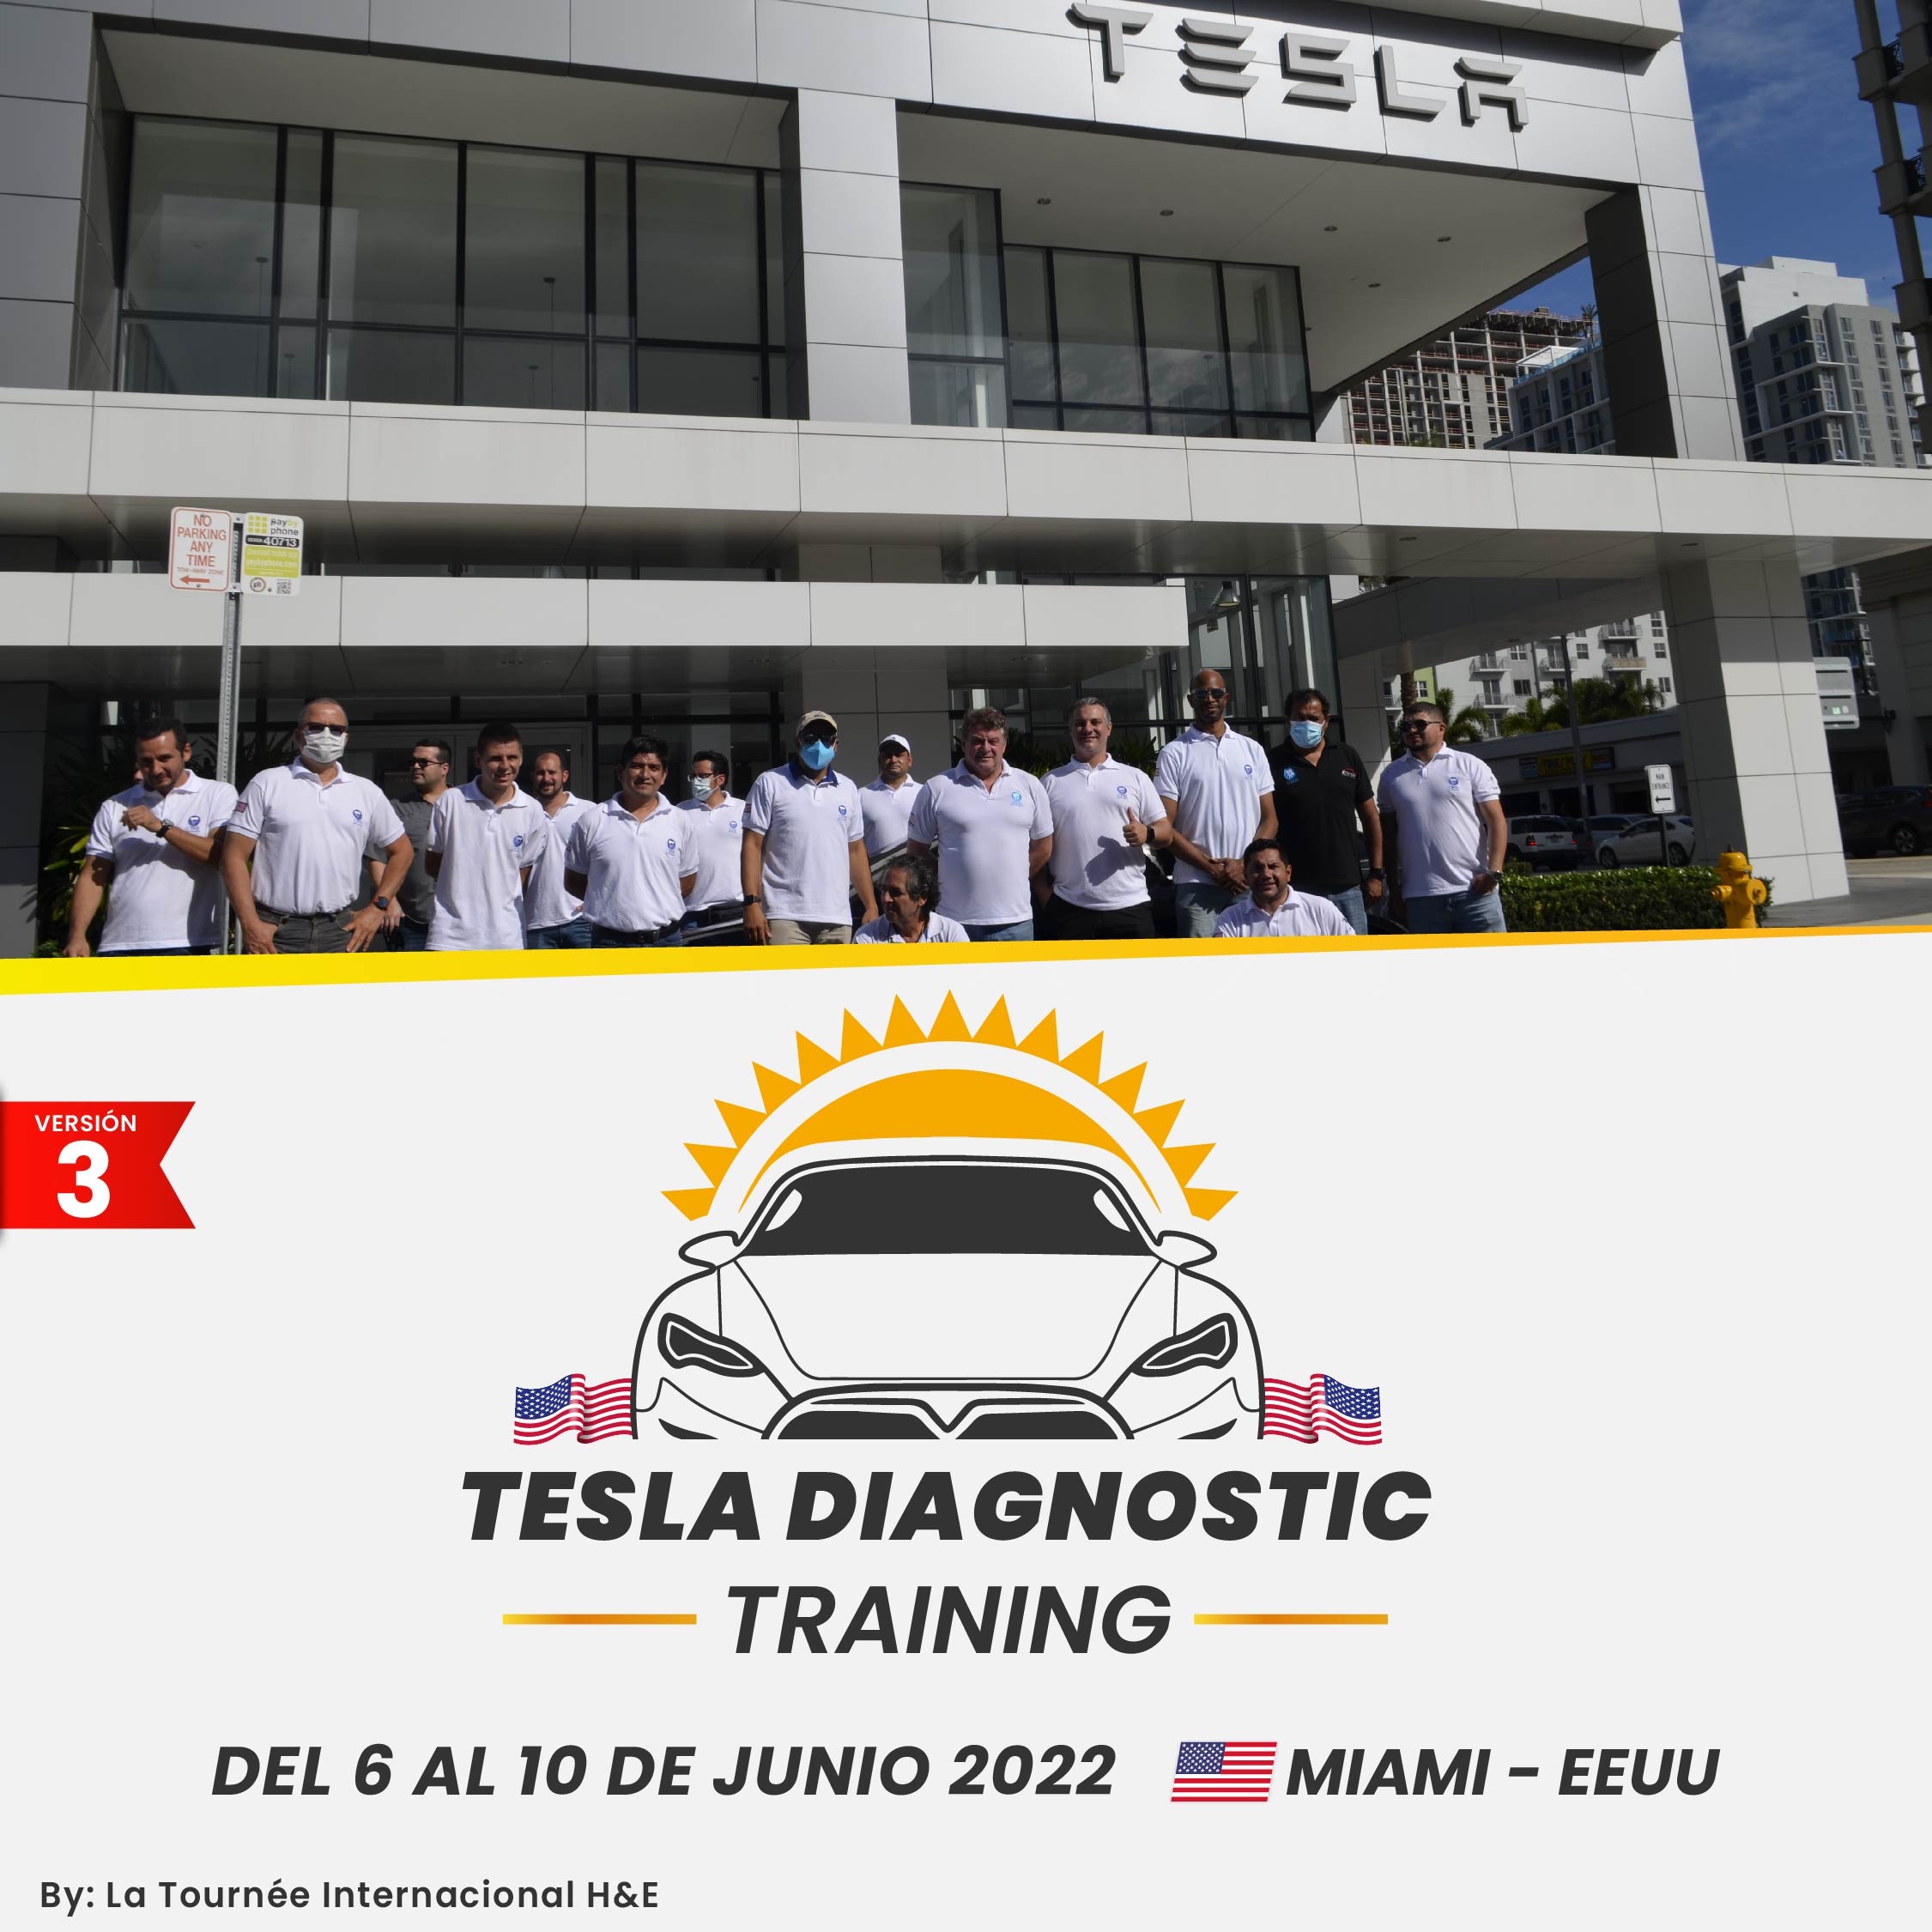 TERCERA VERSION Tesla Diagnostic Training Marck place